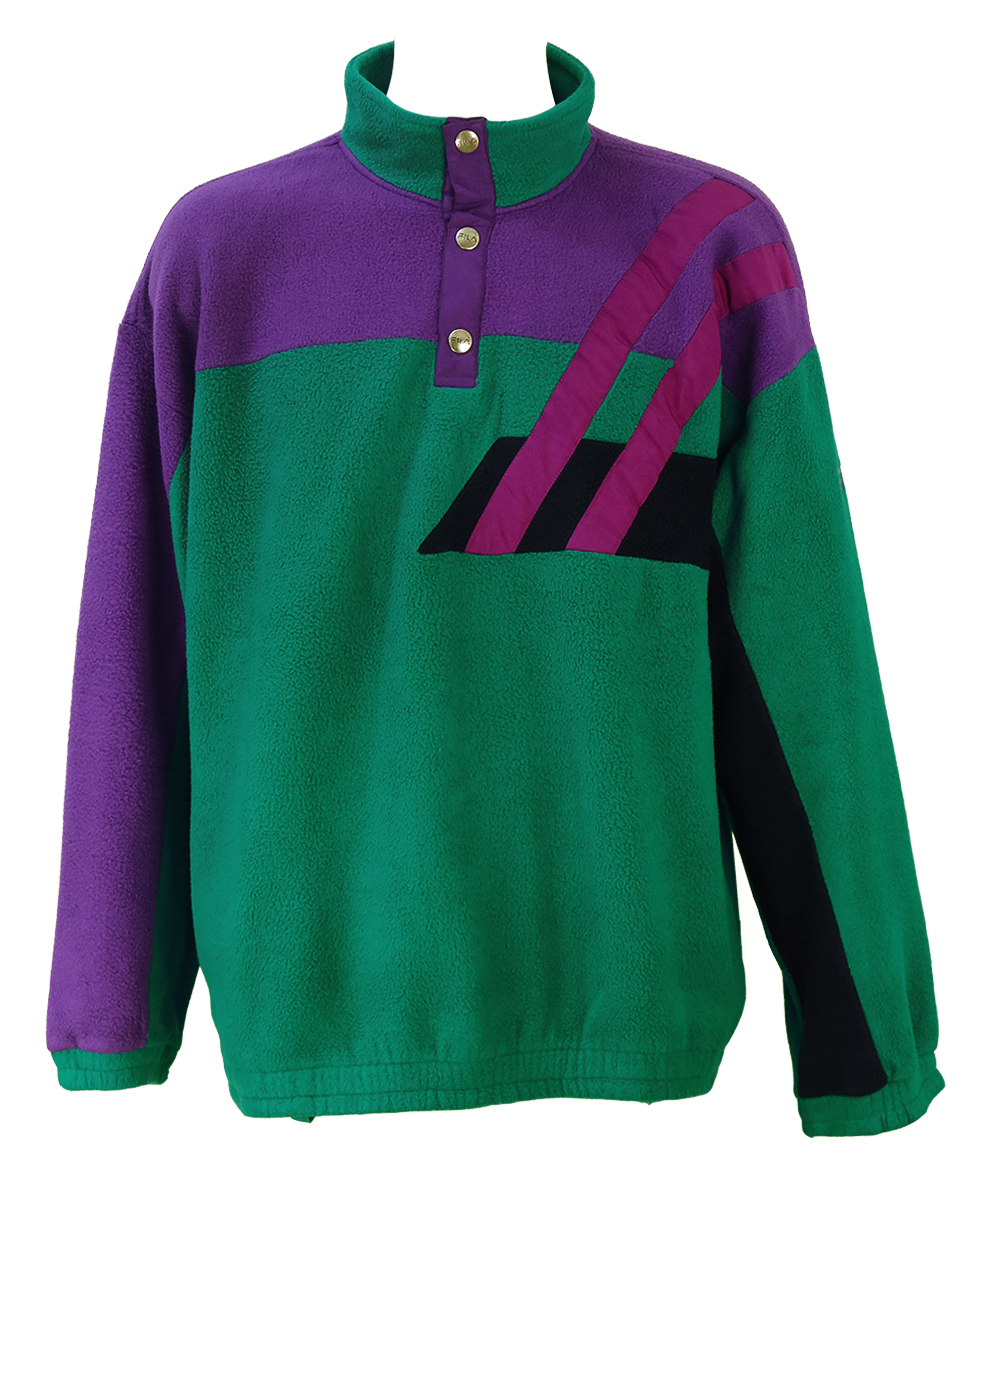 hebben zich vergist site Supersonische snelheid Fila Magic Line Green, Purple and Black Striped Detail Fleece Top – L/XL |  Reign Vintage